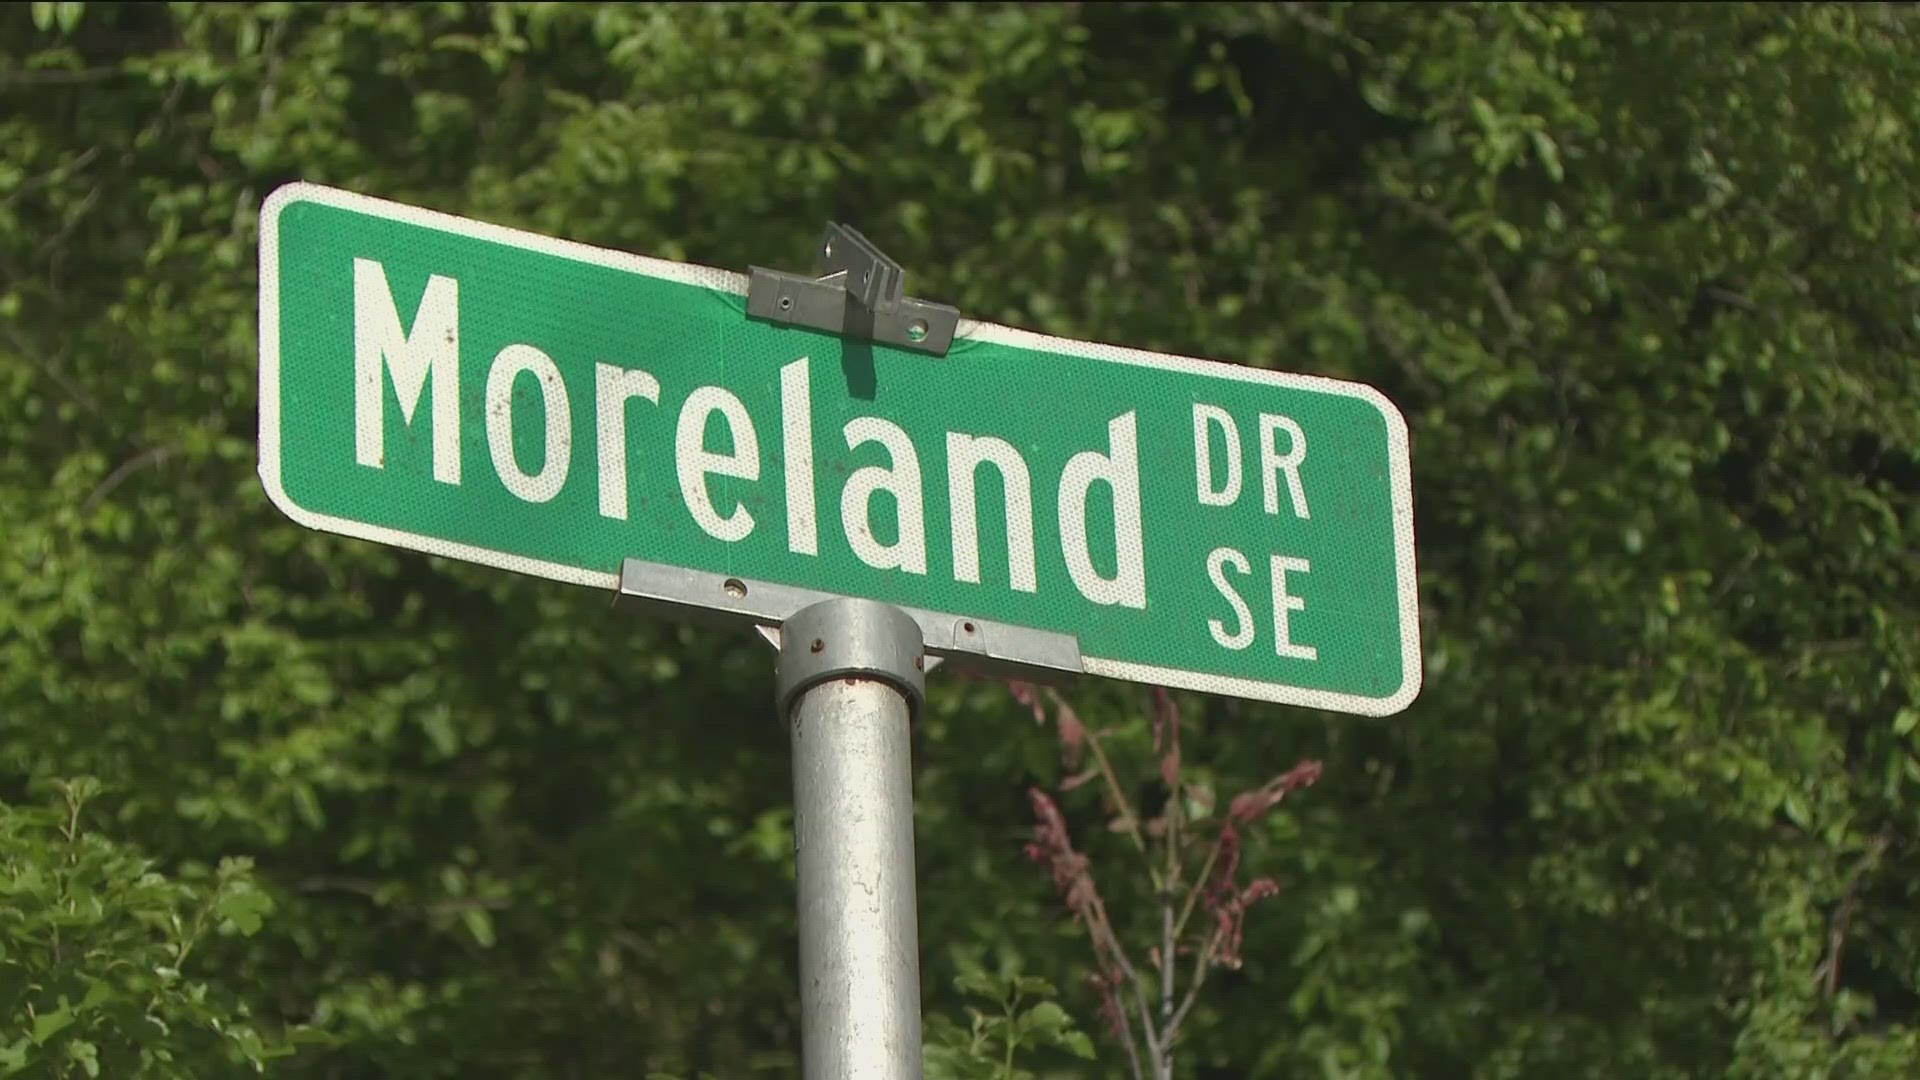 Atlanta Police responded to the 900 block of Moreland Drive SE.